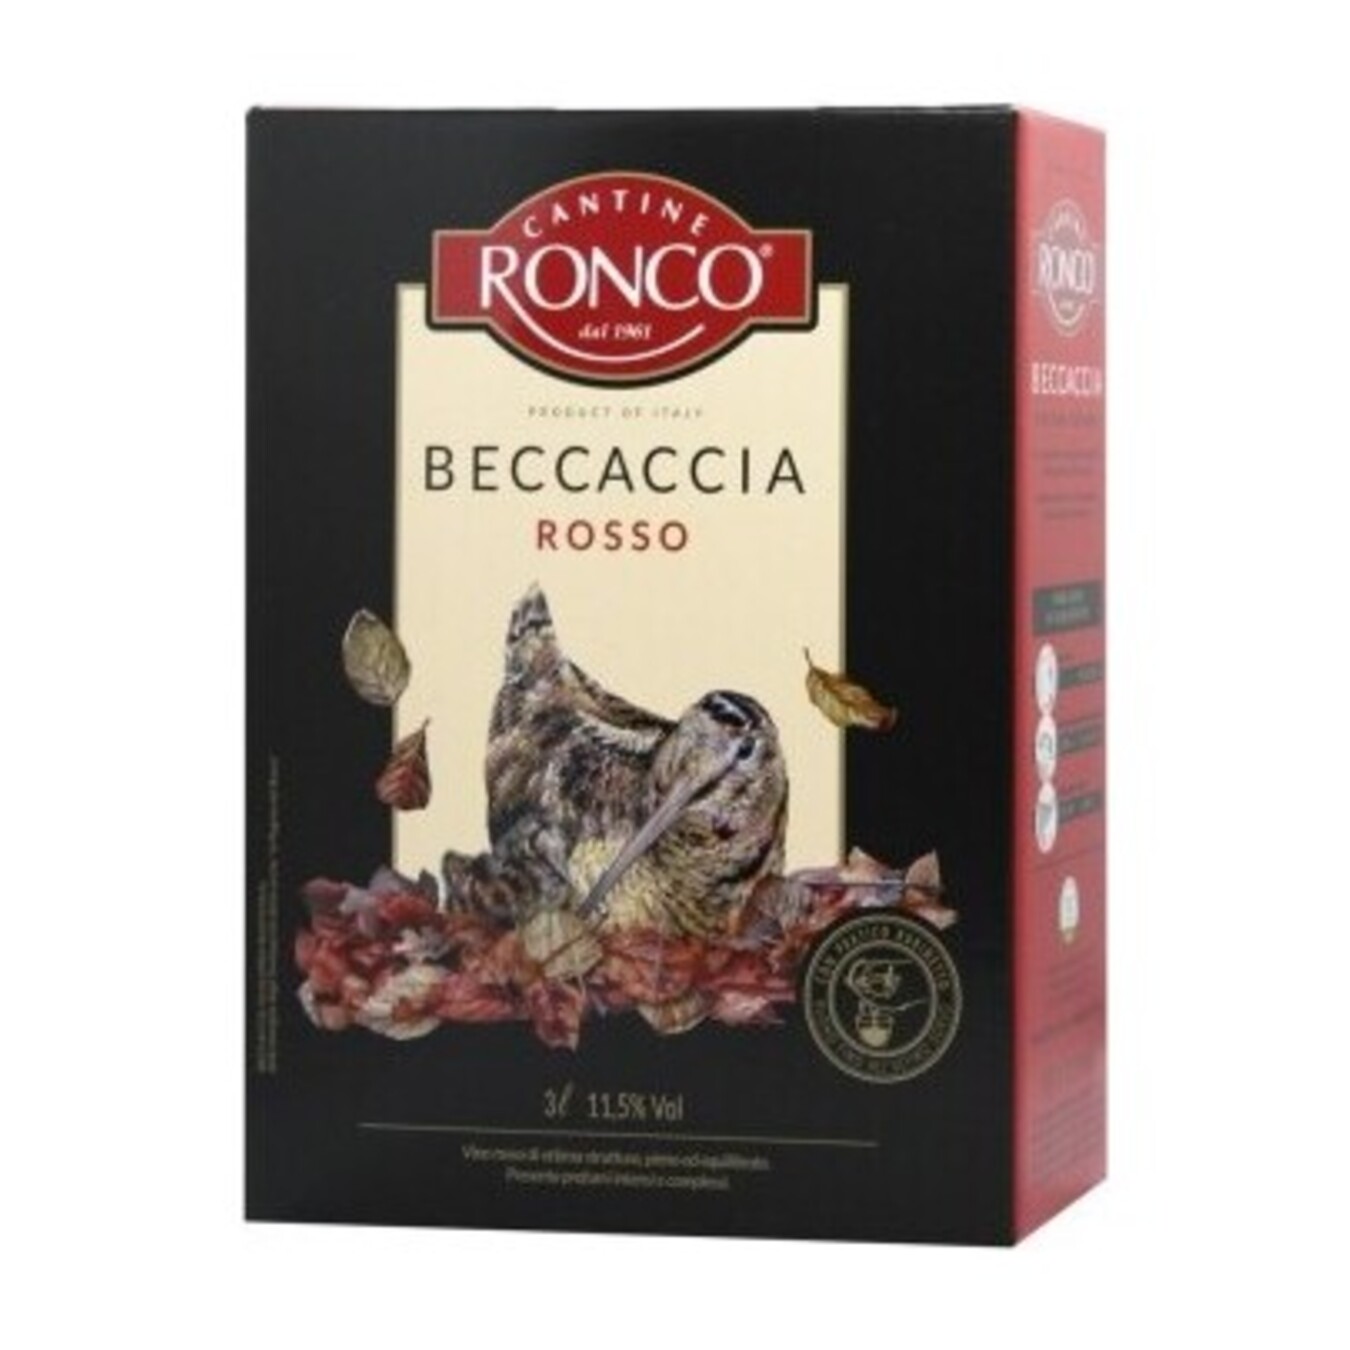 Cantine Ronco Beccaccia red dry wine 11.5% 3l 2